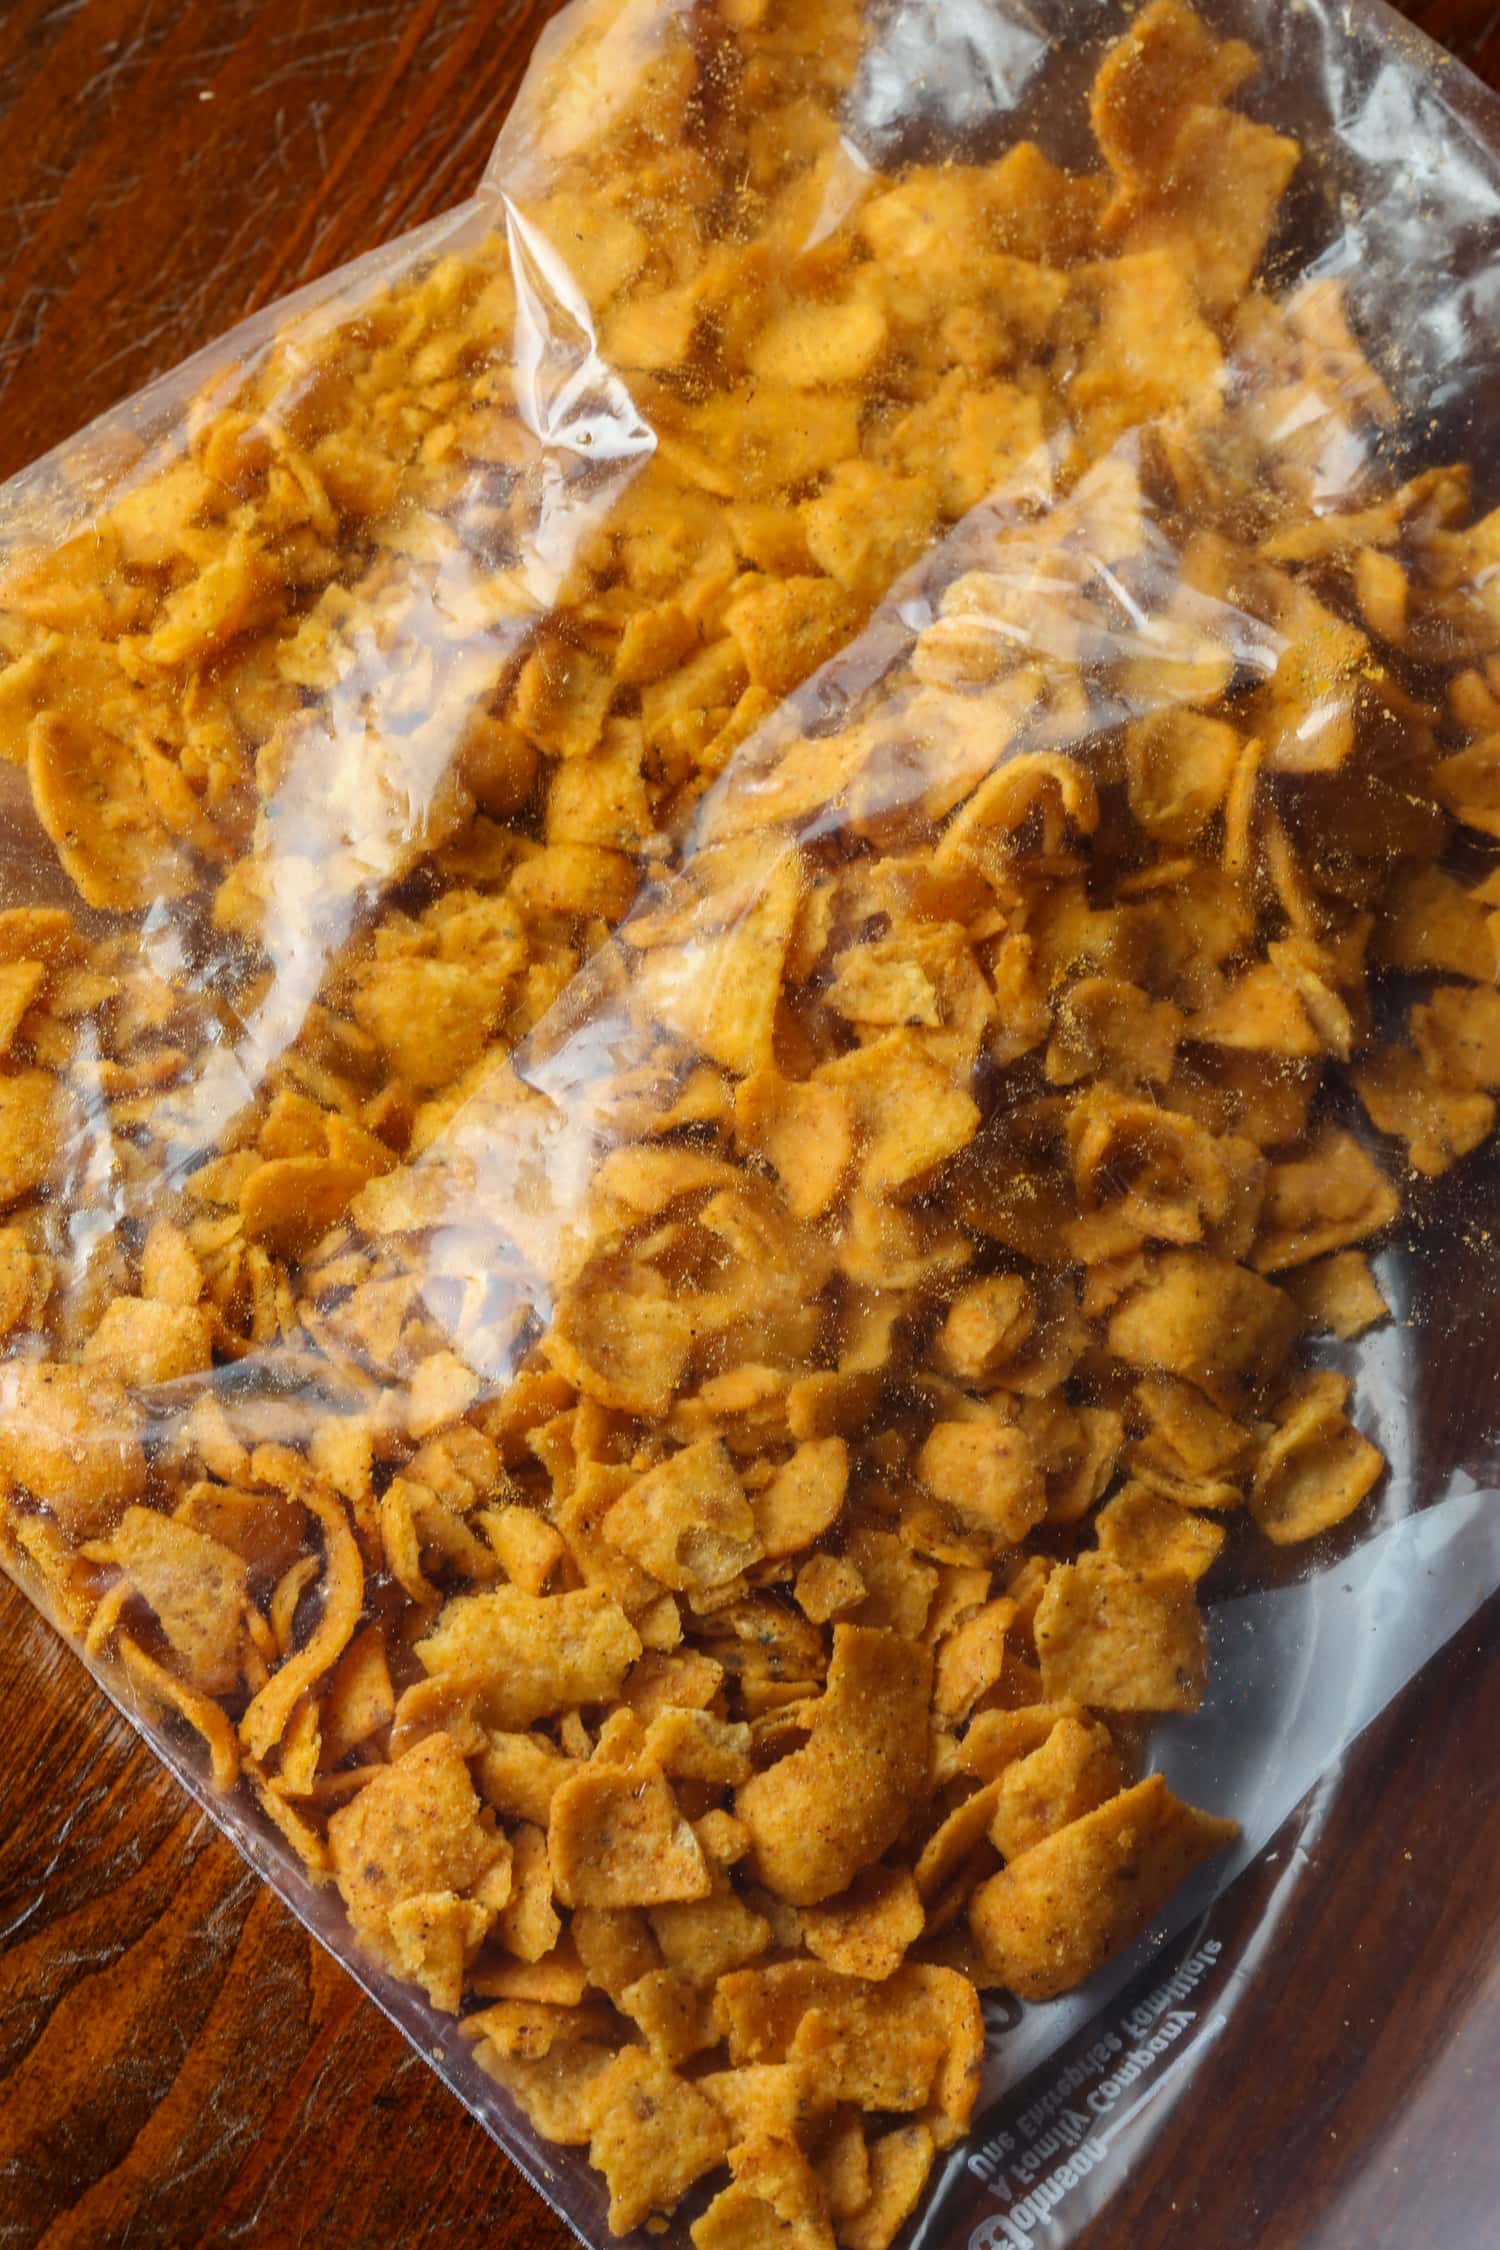 Crushed Fritos inside a gallon ziplock bag.